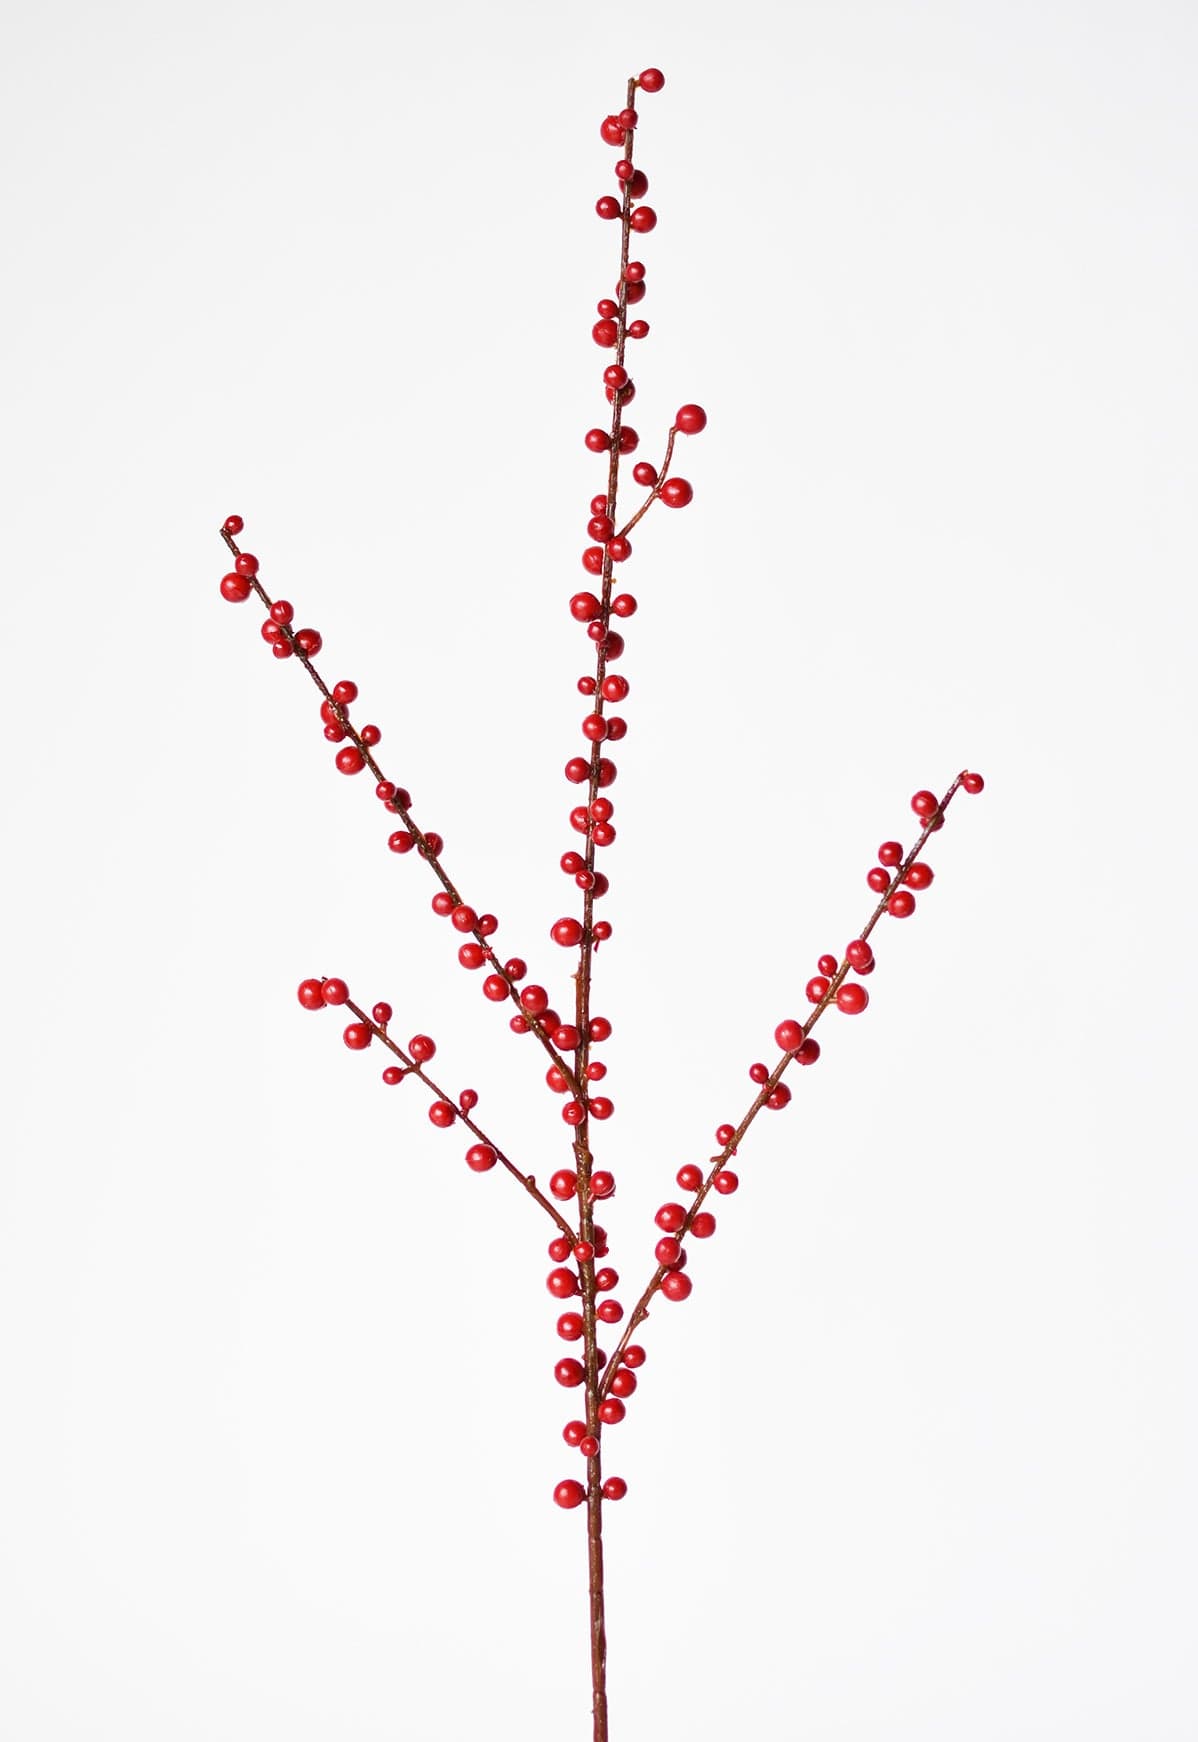 Red Berry stem 62cm  Easy Florist Supplies